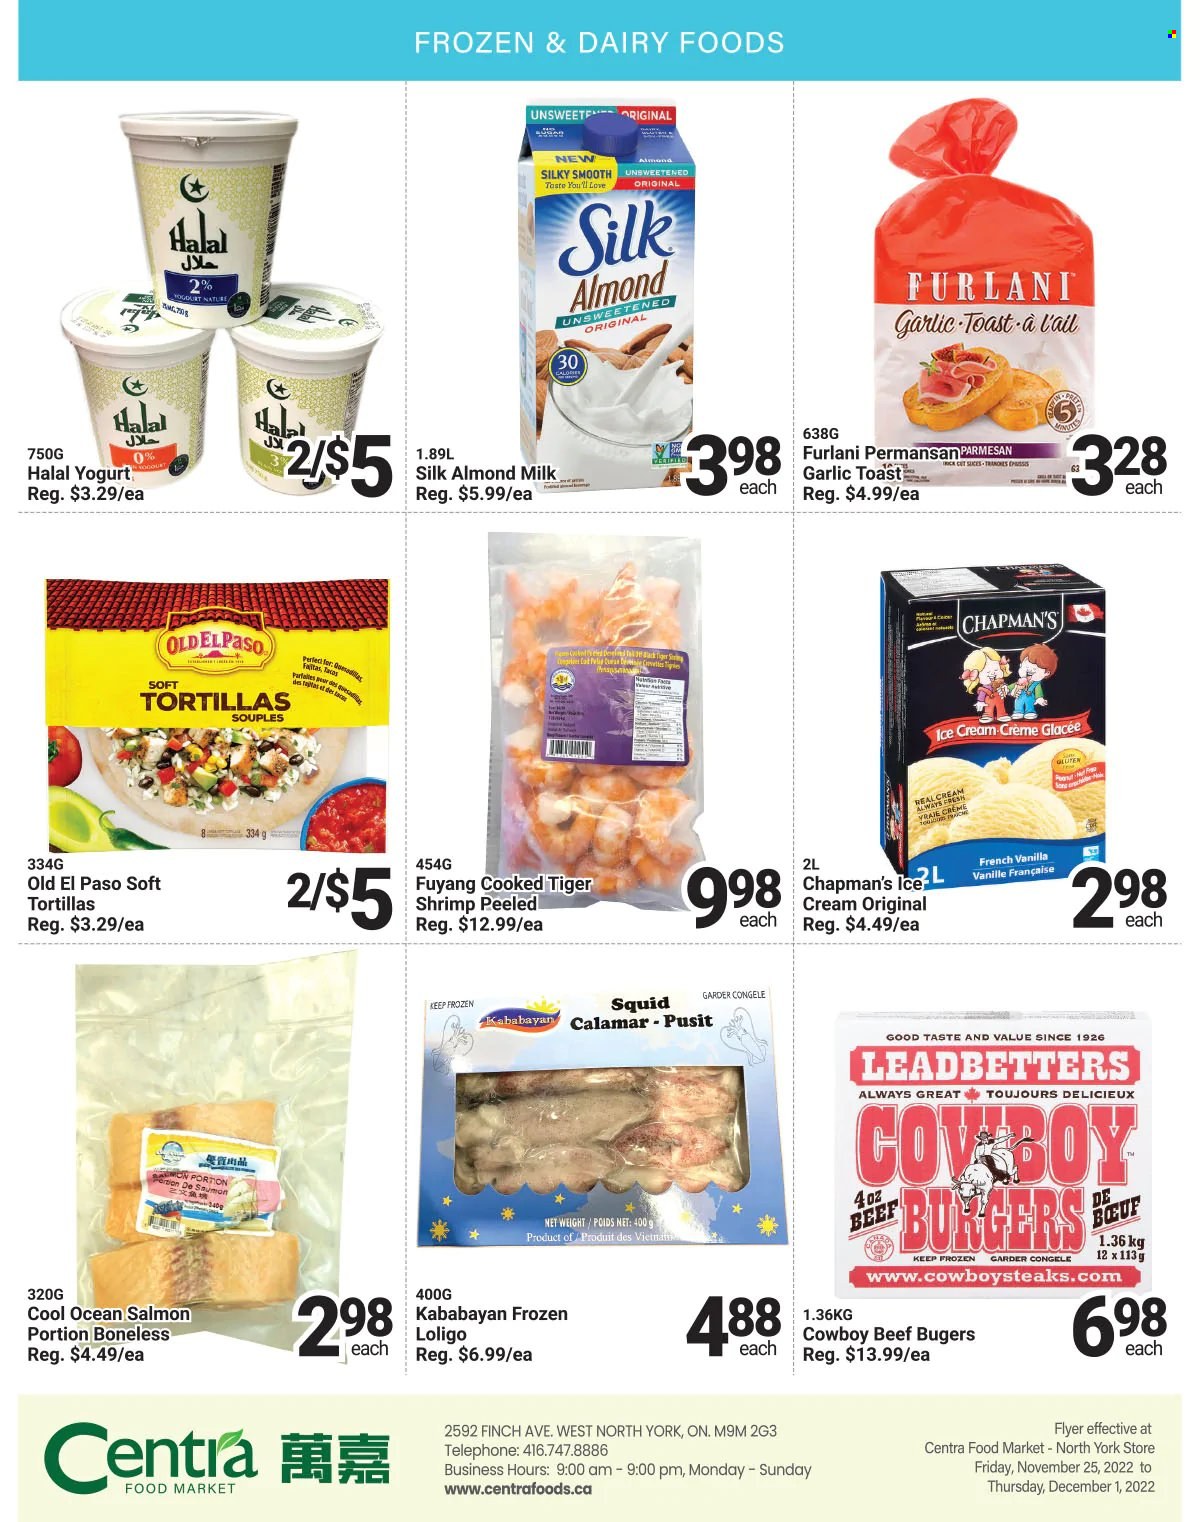 Centra Food Market Flyer - November 25, 2022 - December 01, 2022 - Sales products - tortillas, Old El Paso, salmon, squid, shrimps, hamburger, parmesan, yoghurt, almond milk, milk, ice cream, sugar. Page 3.